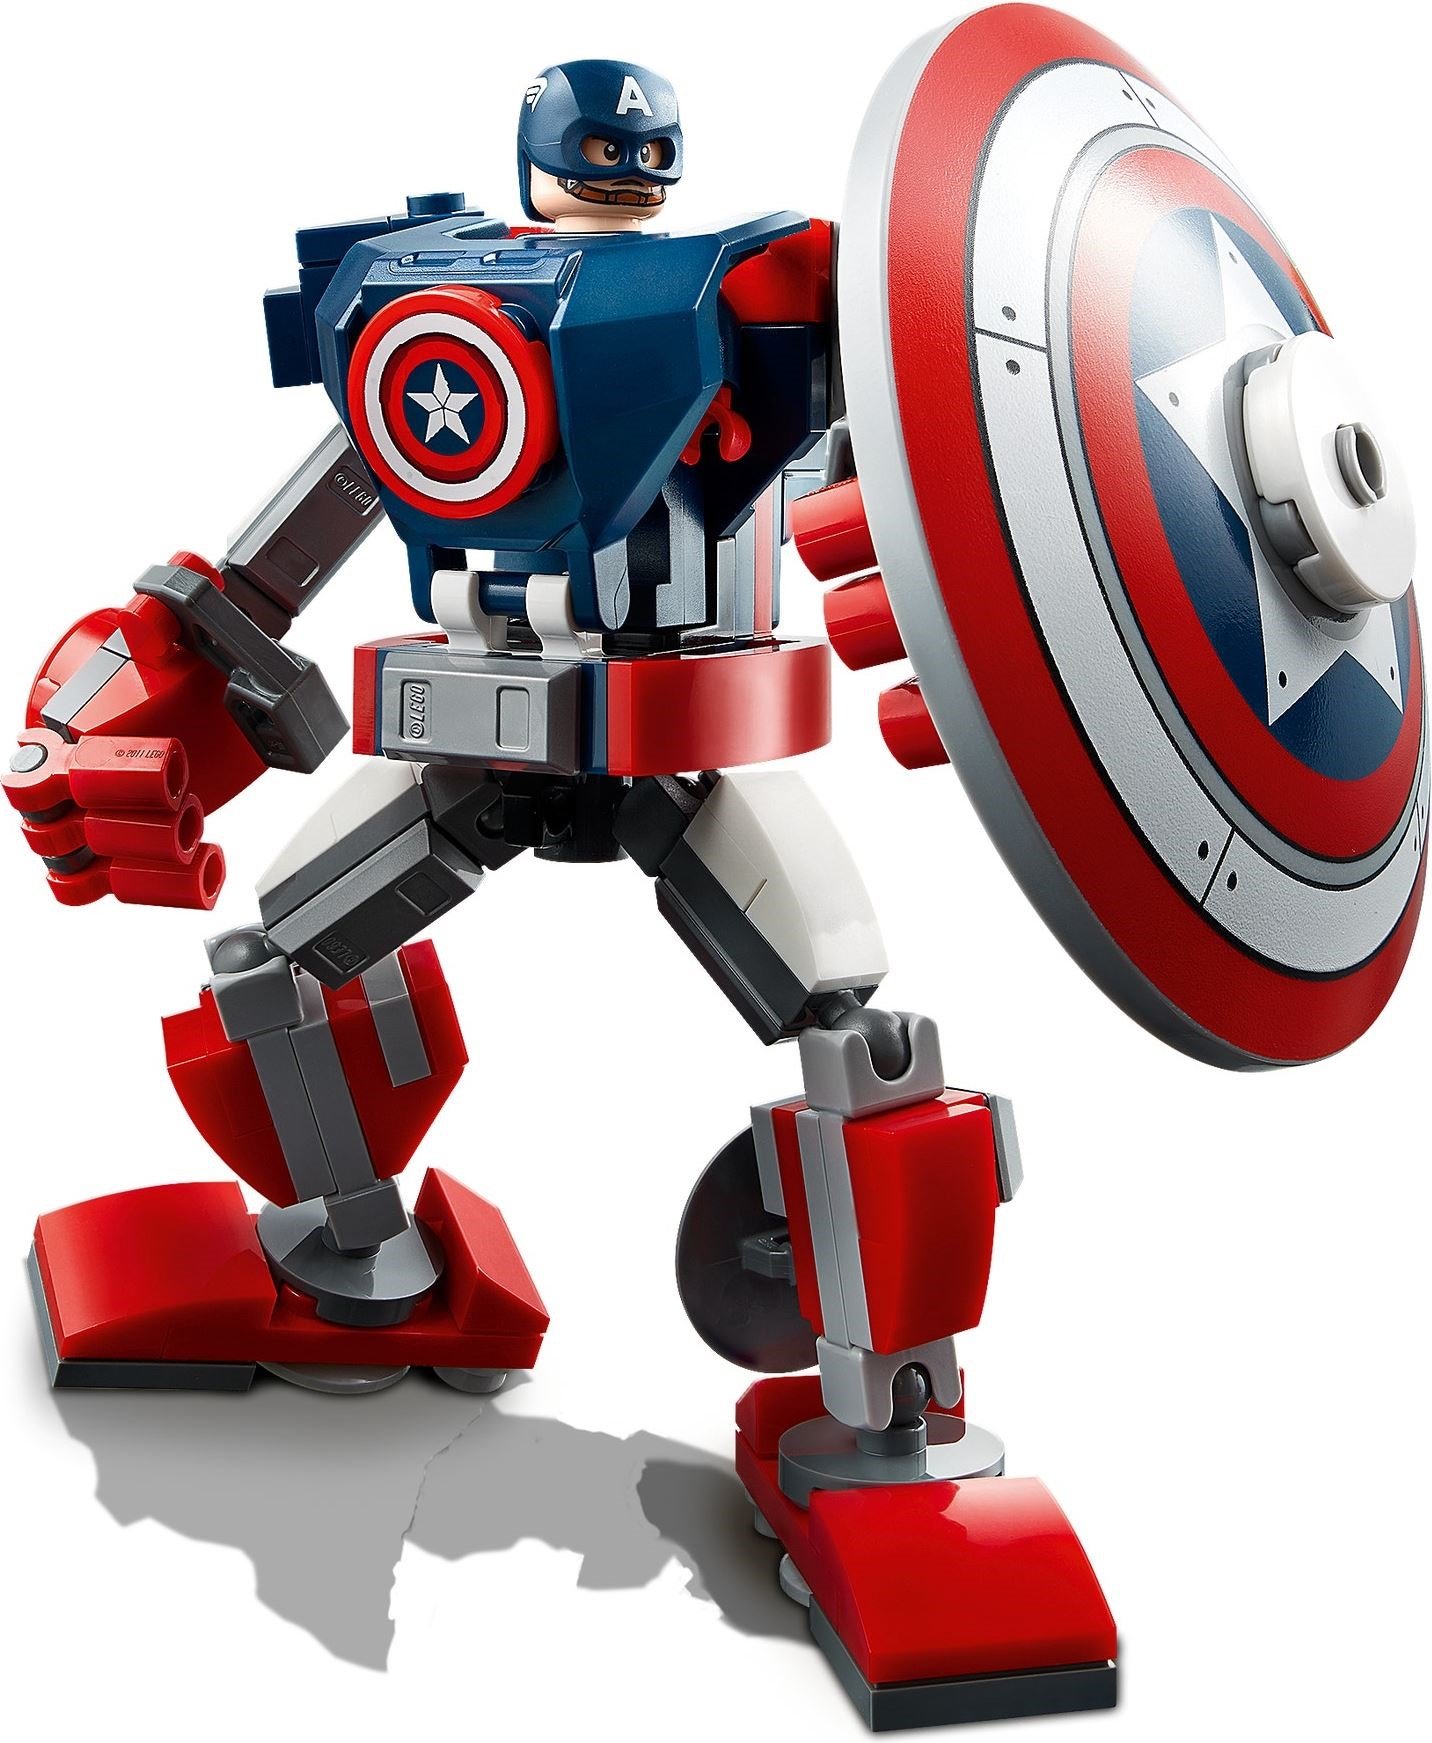 Captain America mech Armor 76168 Lego SUPER HEROES